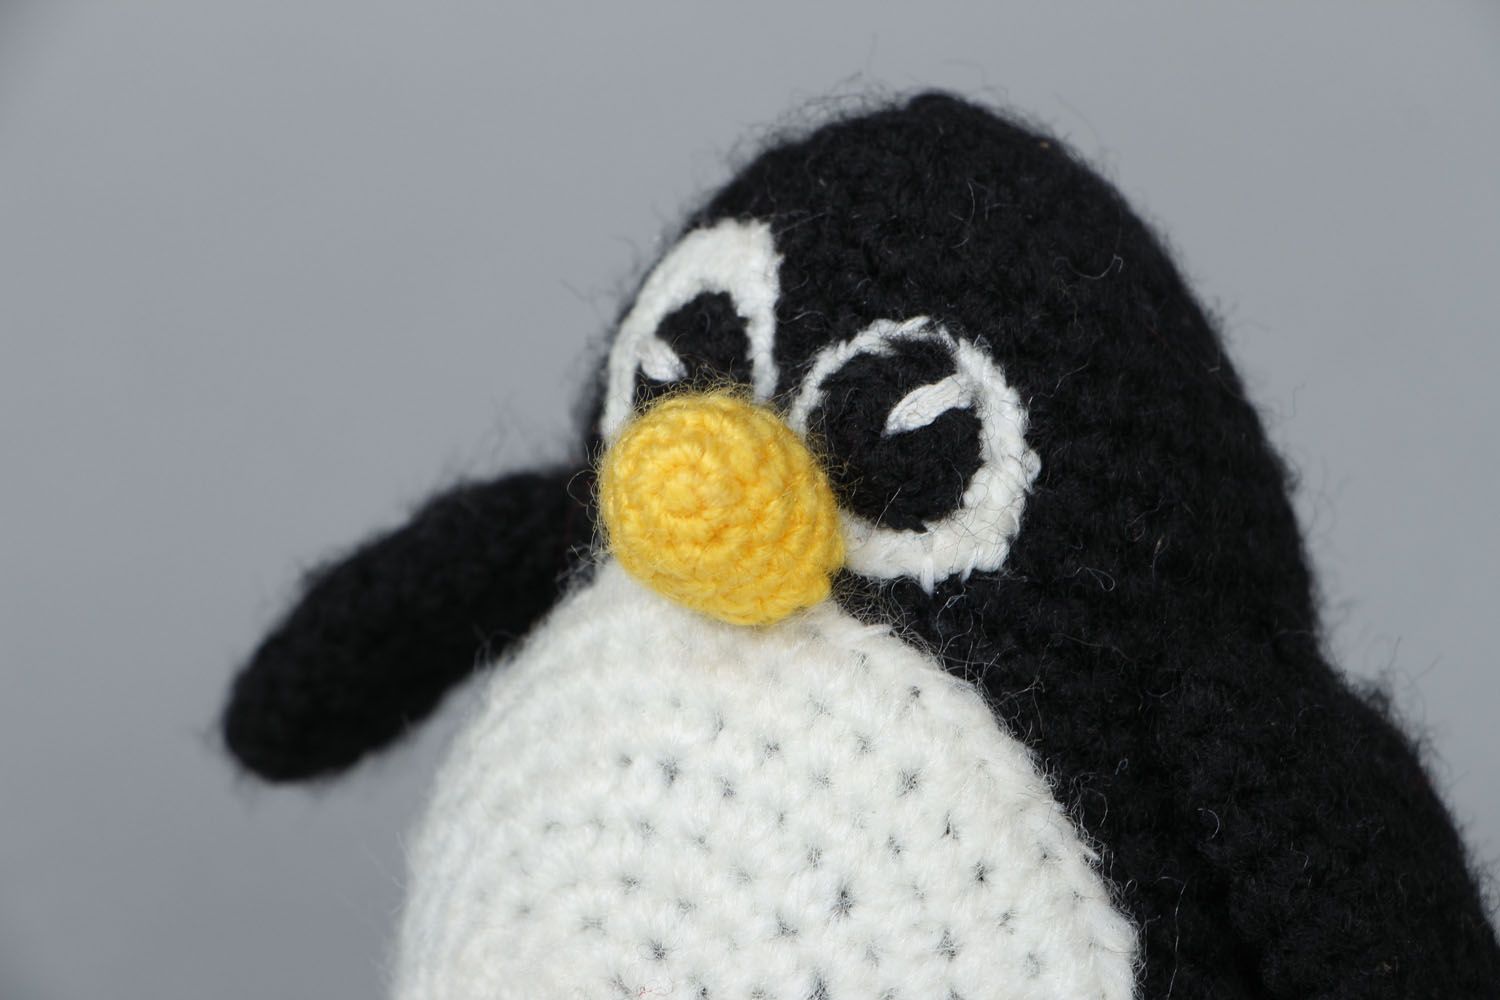 Soft crochet toy Penguin photo 2